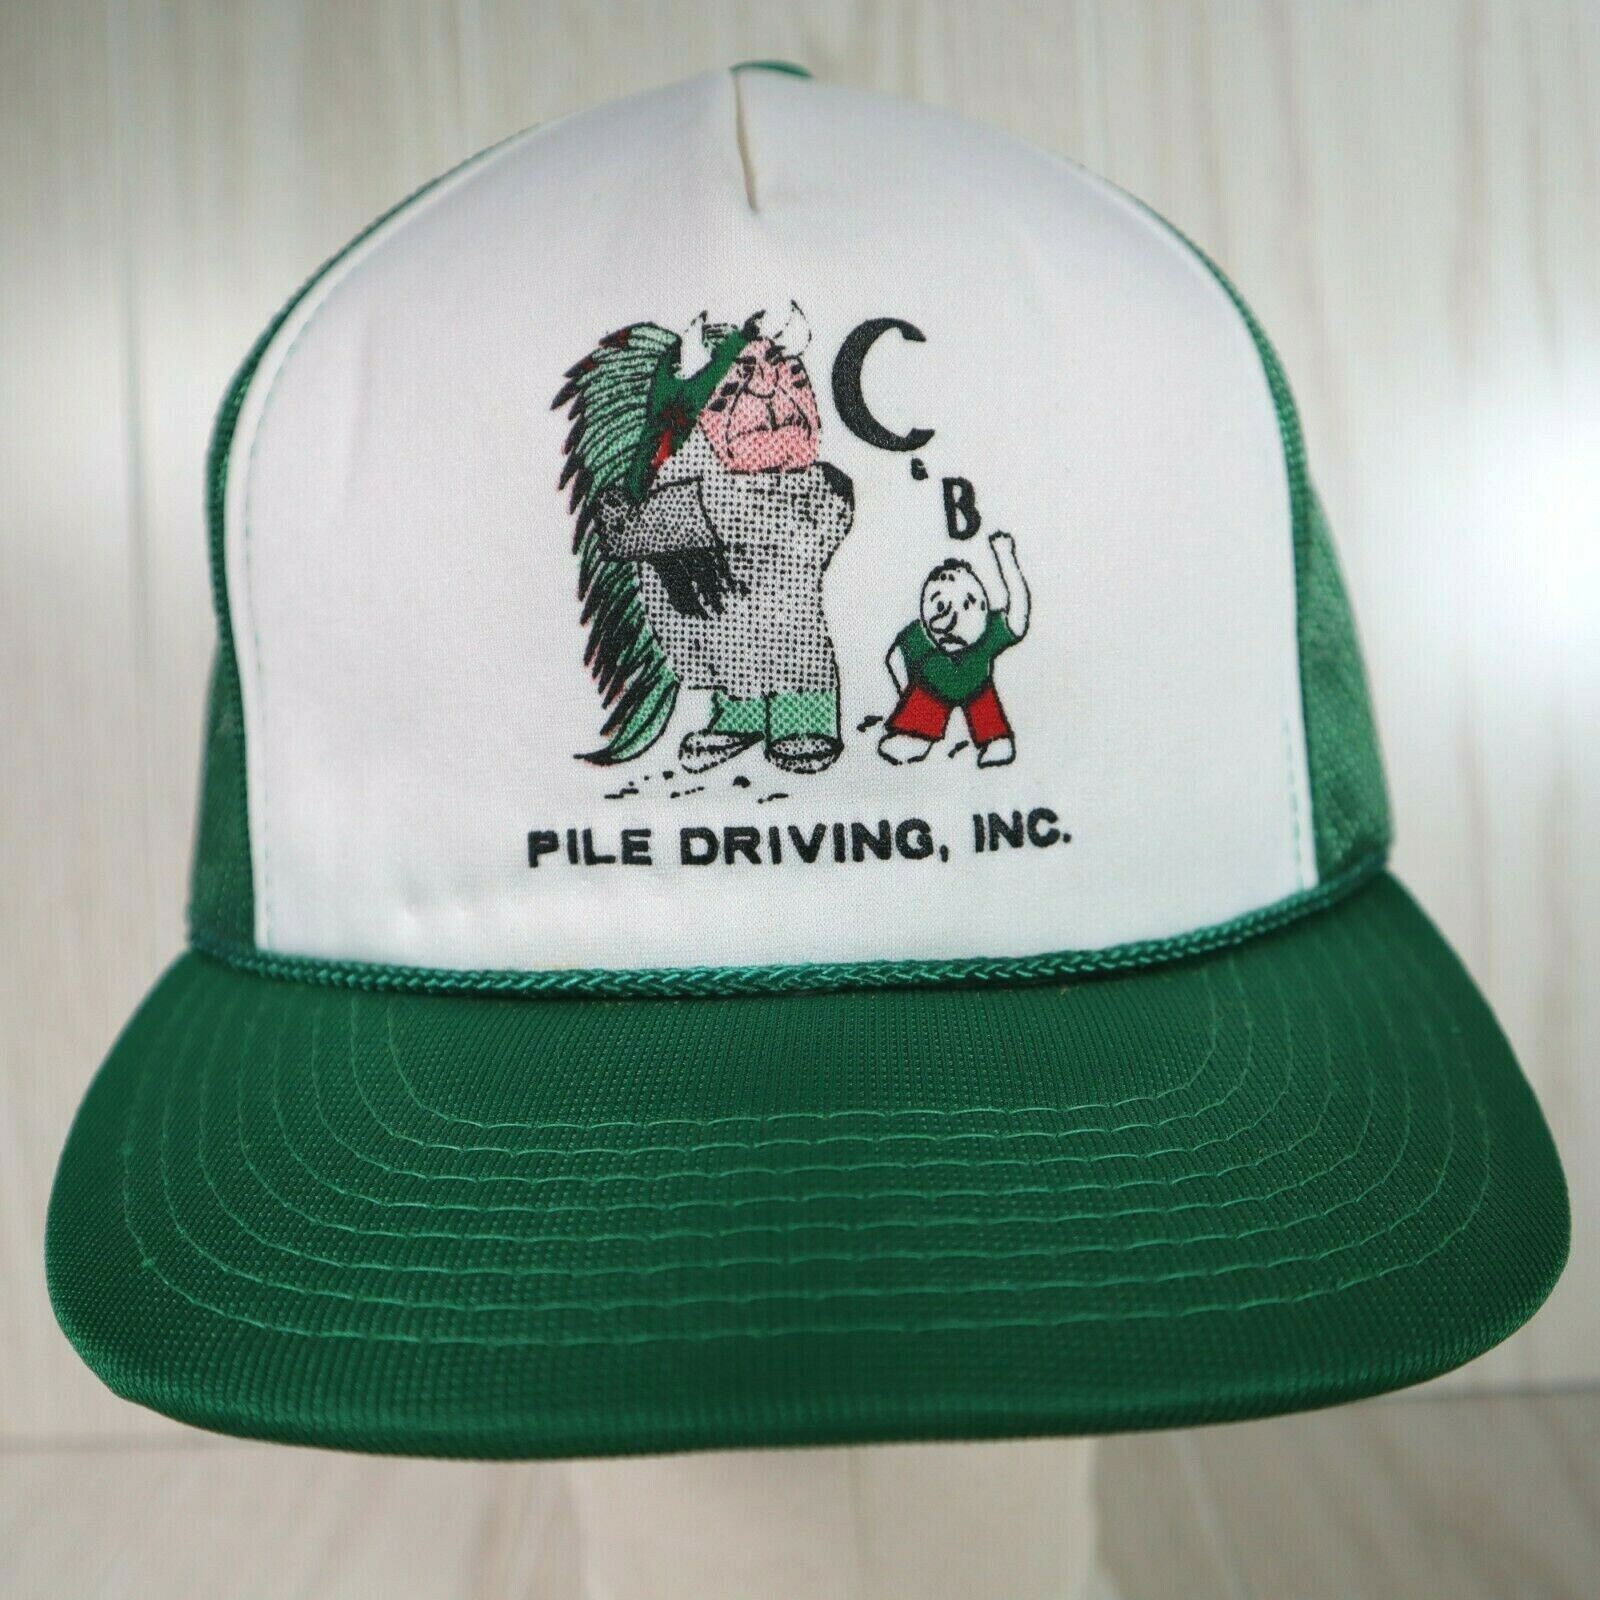 Vintage Trucker Hat Cap Green White Adjustable Mesh Snapback